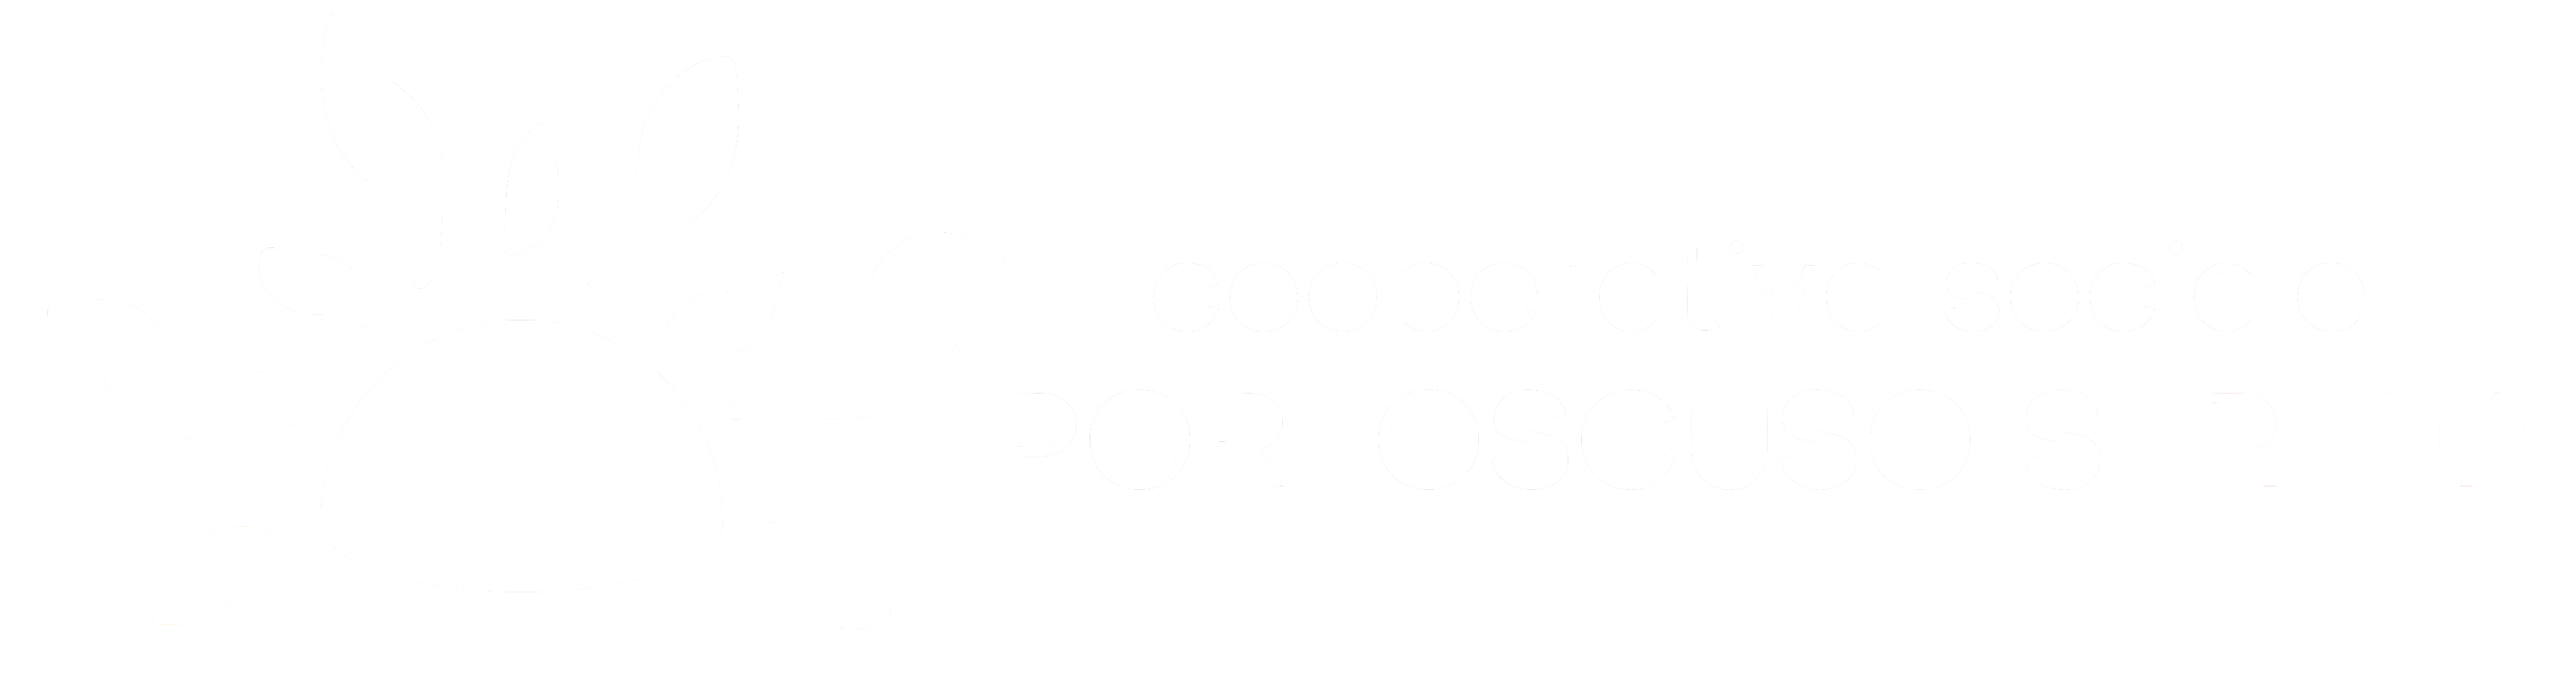 Portoscuso Serena - Logo (White)